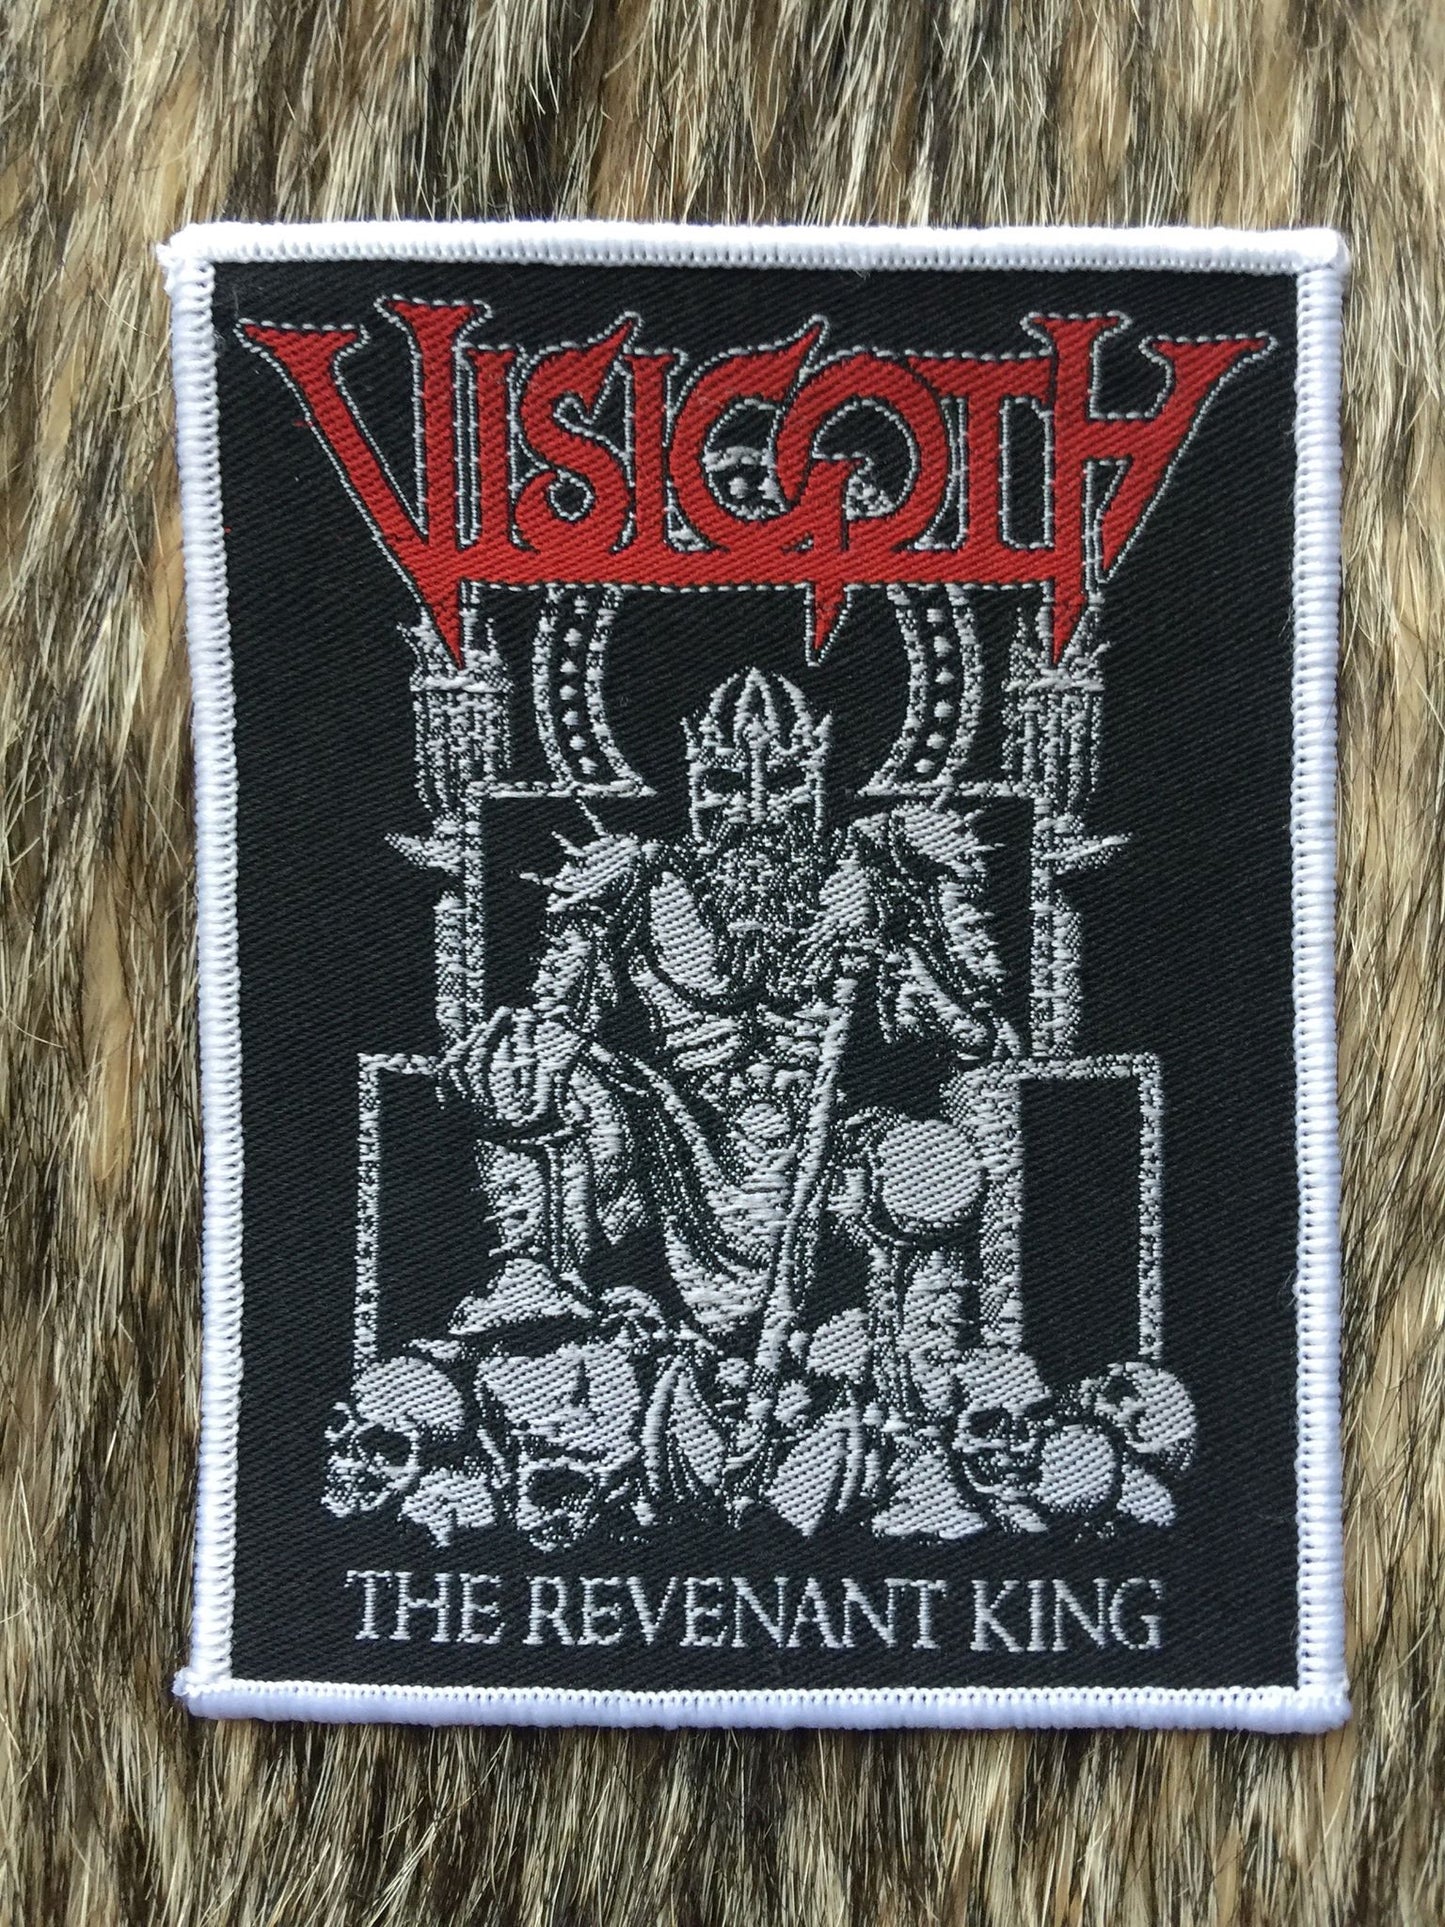 Visigoth	- The Revenant King White Border Patch